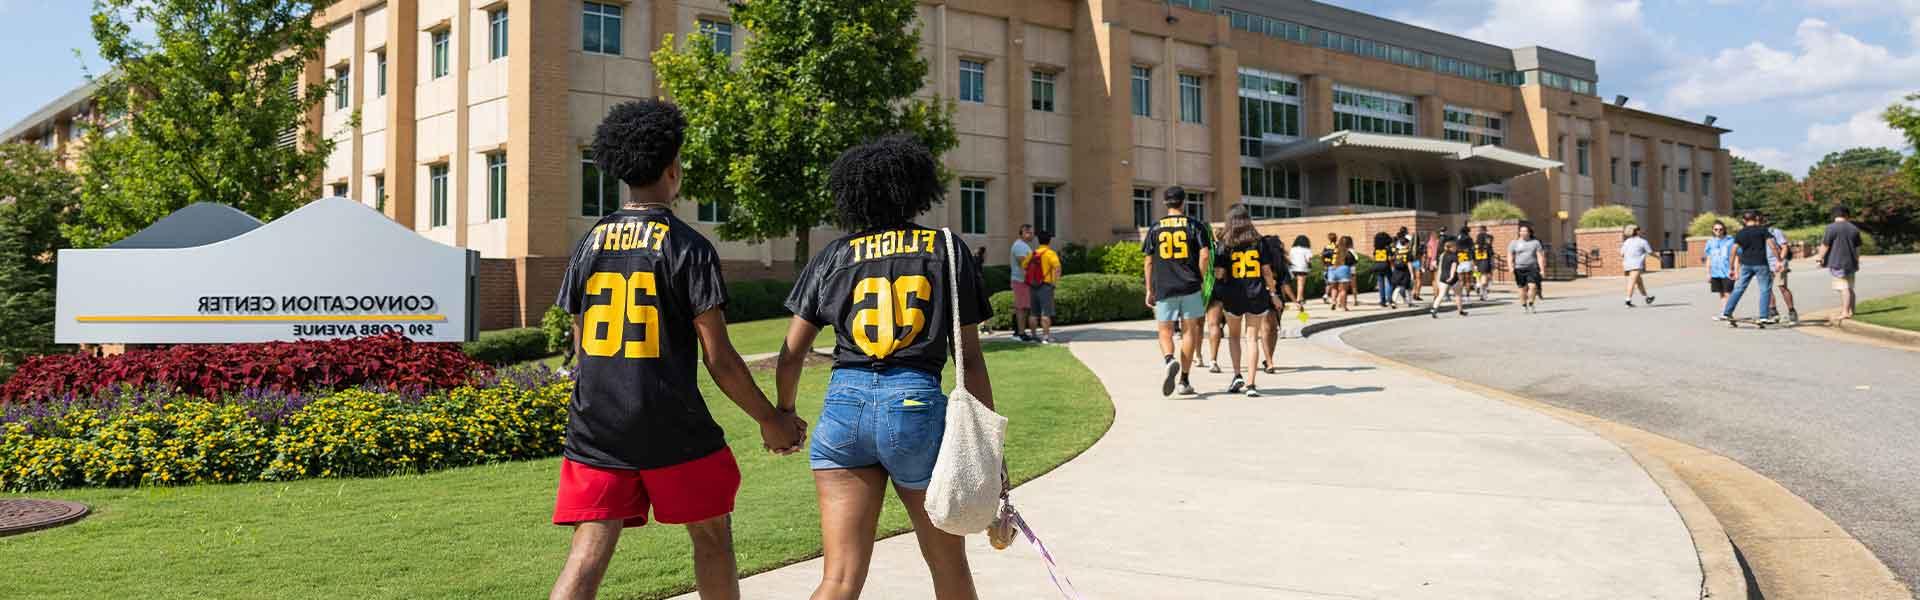 students in FLIGHT26 jerseys walking on campus